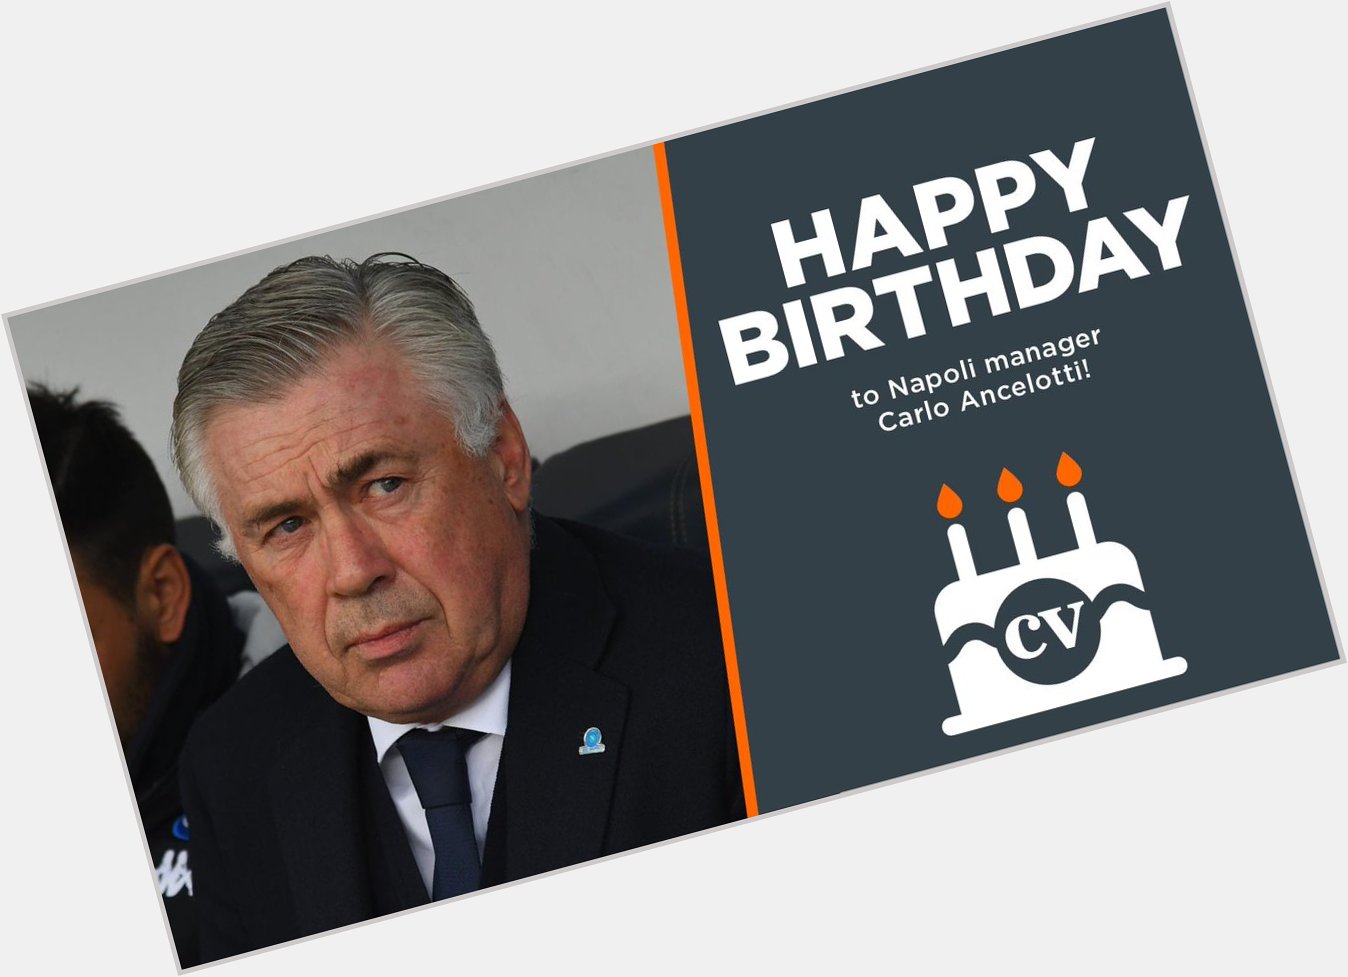  Happy birthday to manager Carlo Ancelotti!  